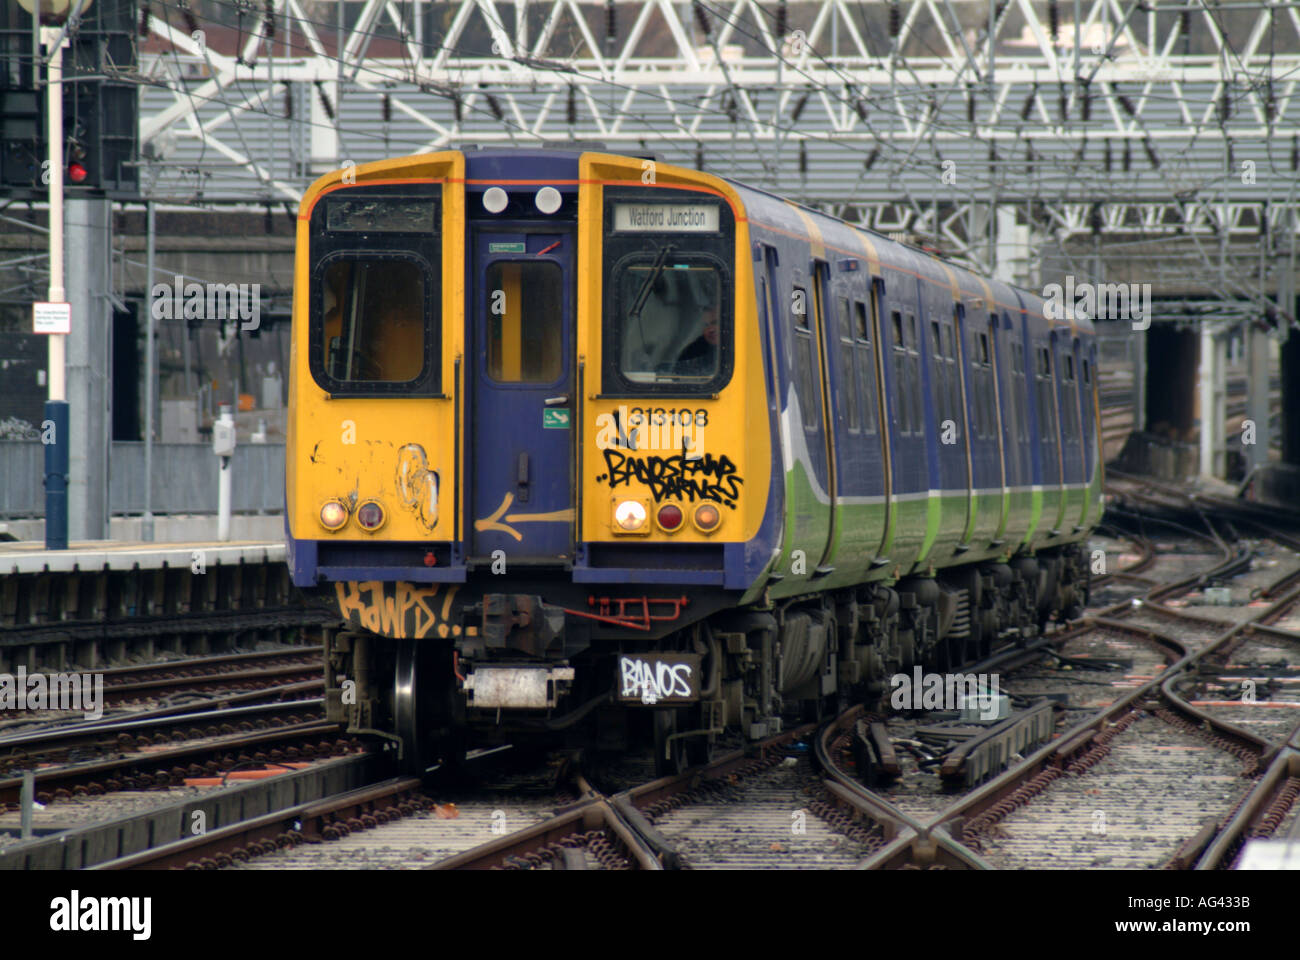 London euston railway station platform hi-res stock photography and images  - Page 3 - Alamy